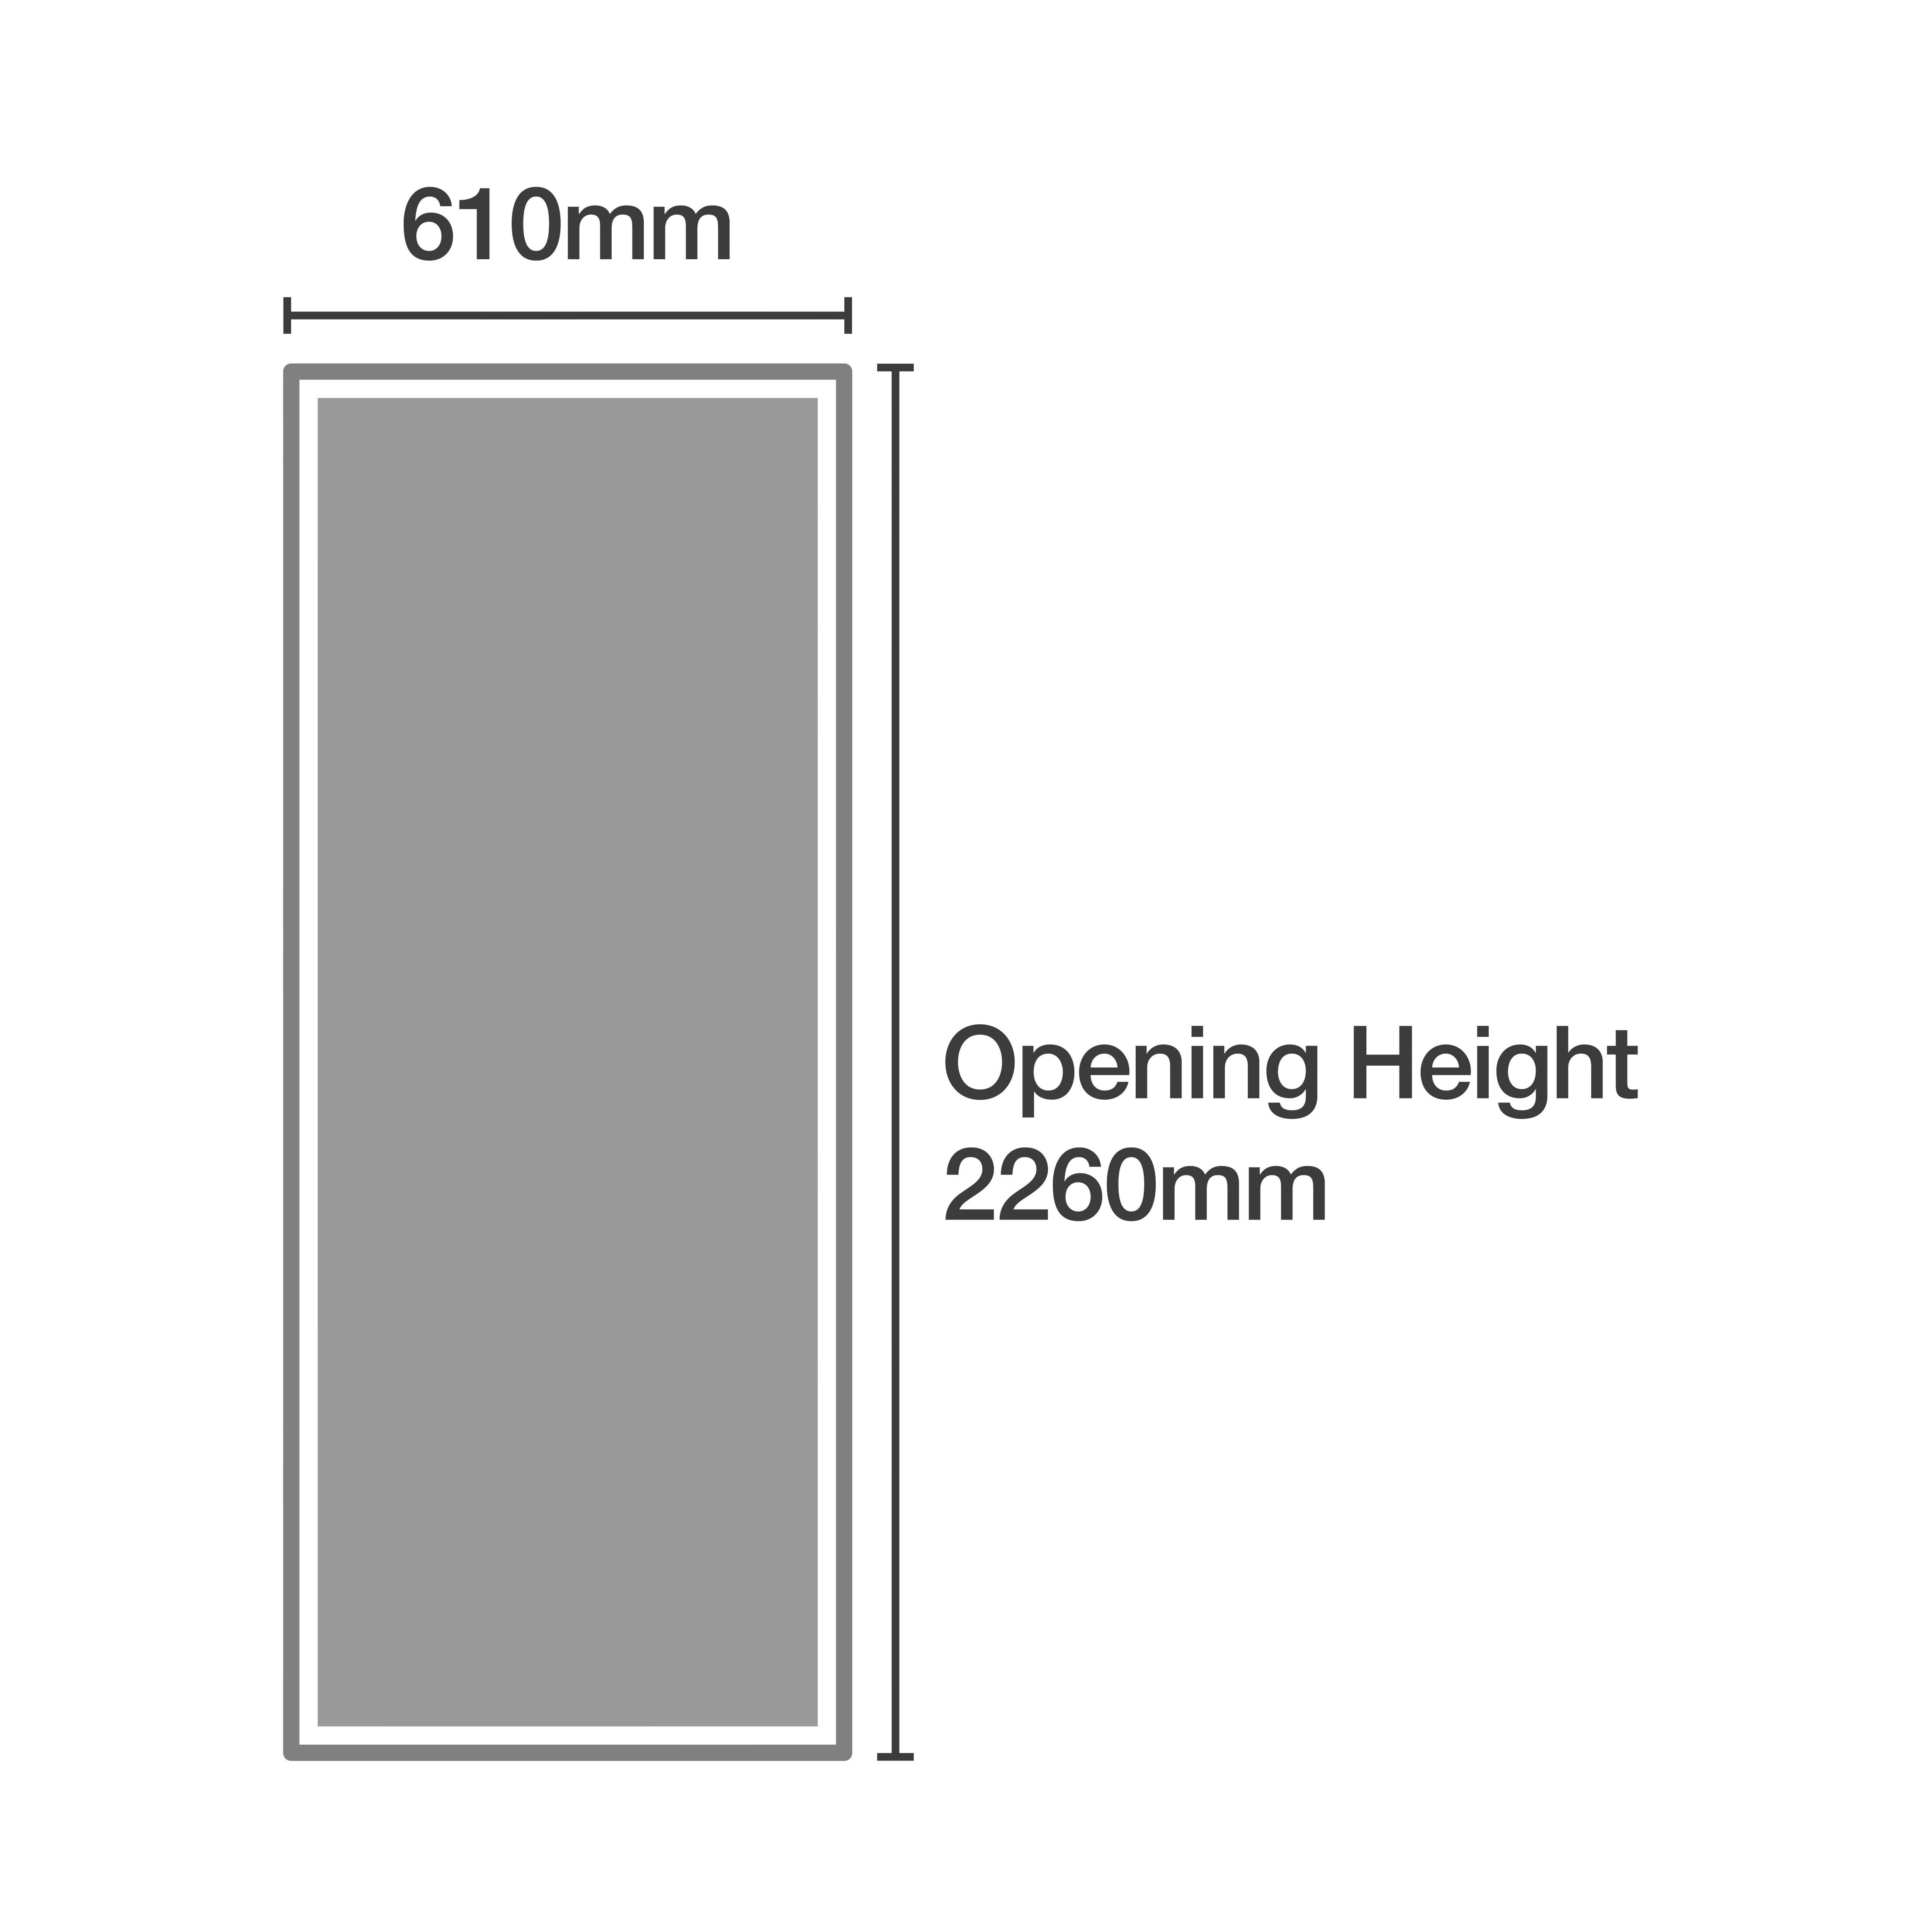 Spacepro Classic Shaker White Mirrored Sliding wardrobe door (H) 2220mm x (W) 610mm